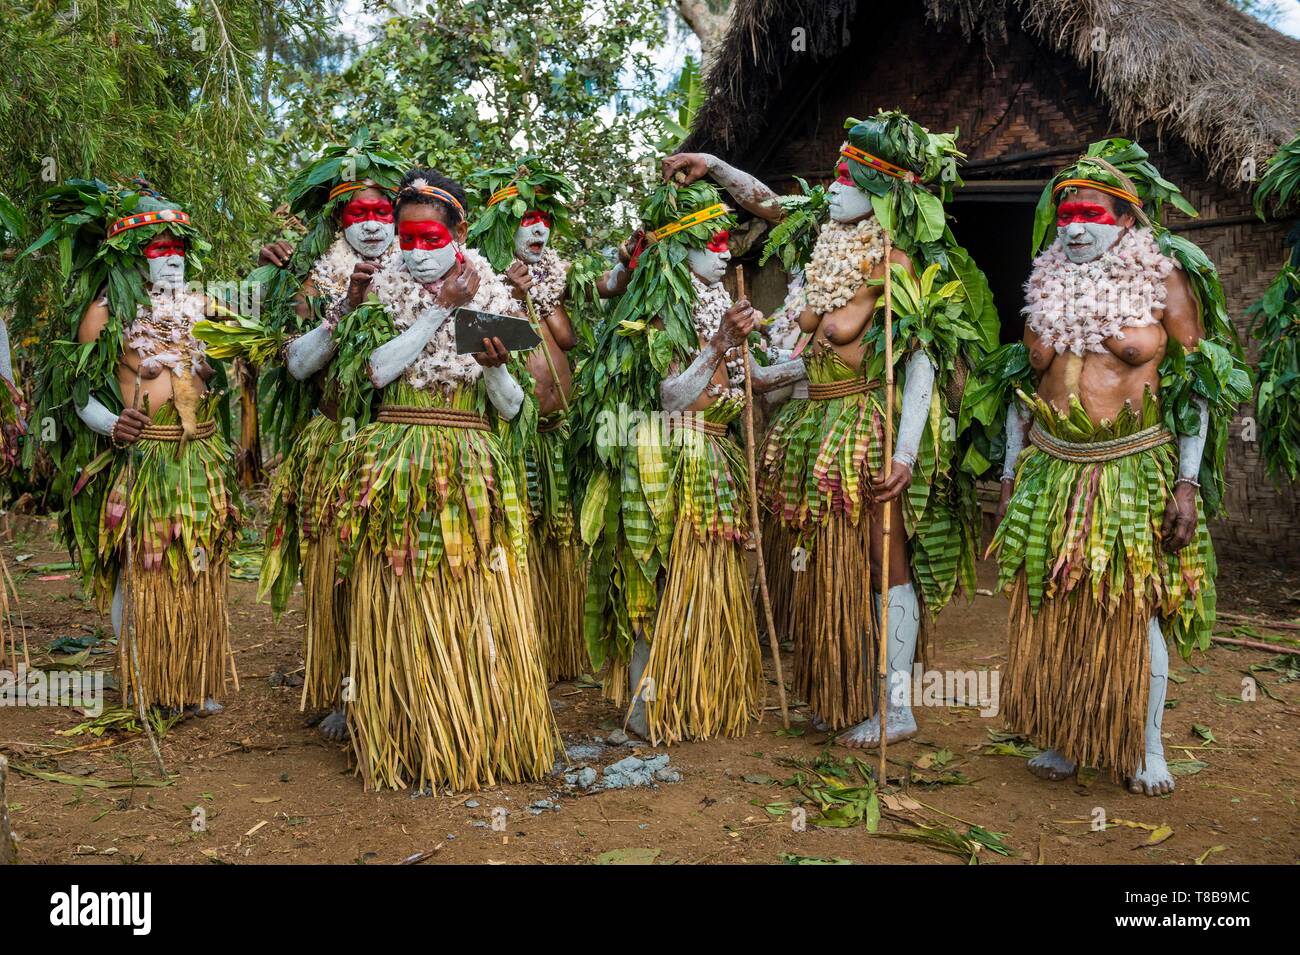 Papua New Guinea, Western Highlands Province, Wahgi Valley, Mount Hagen Region, festival of Hagen Show, traditional sing sing group women Stock Photo